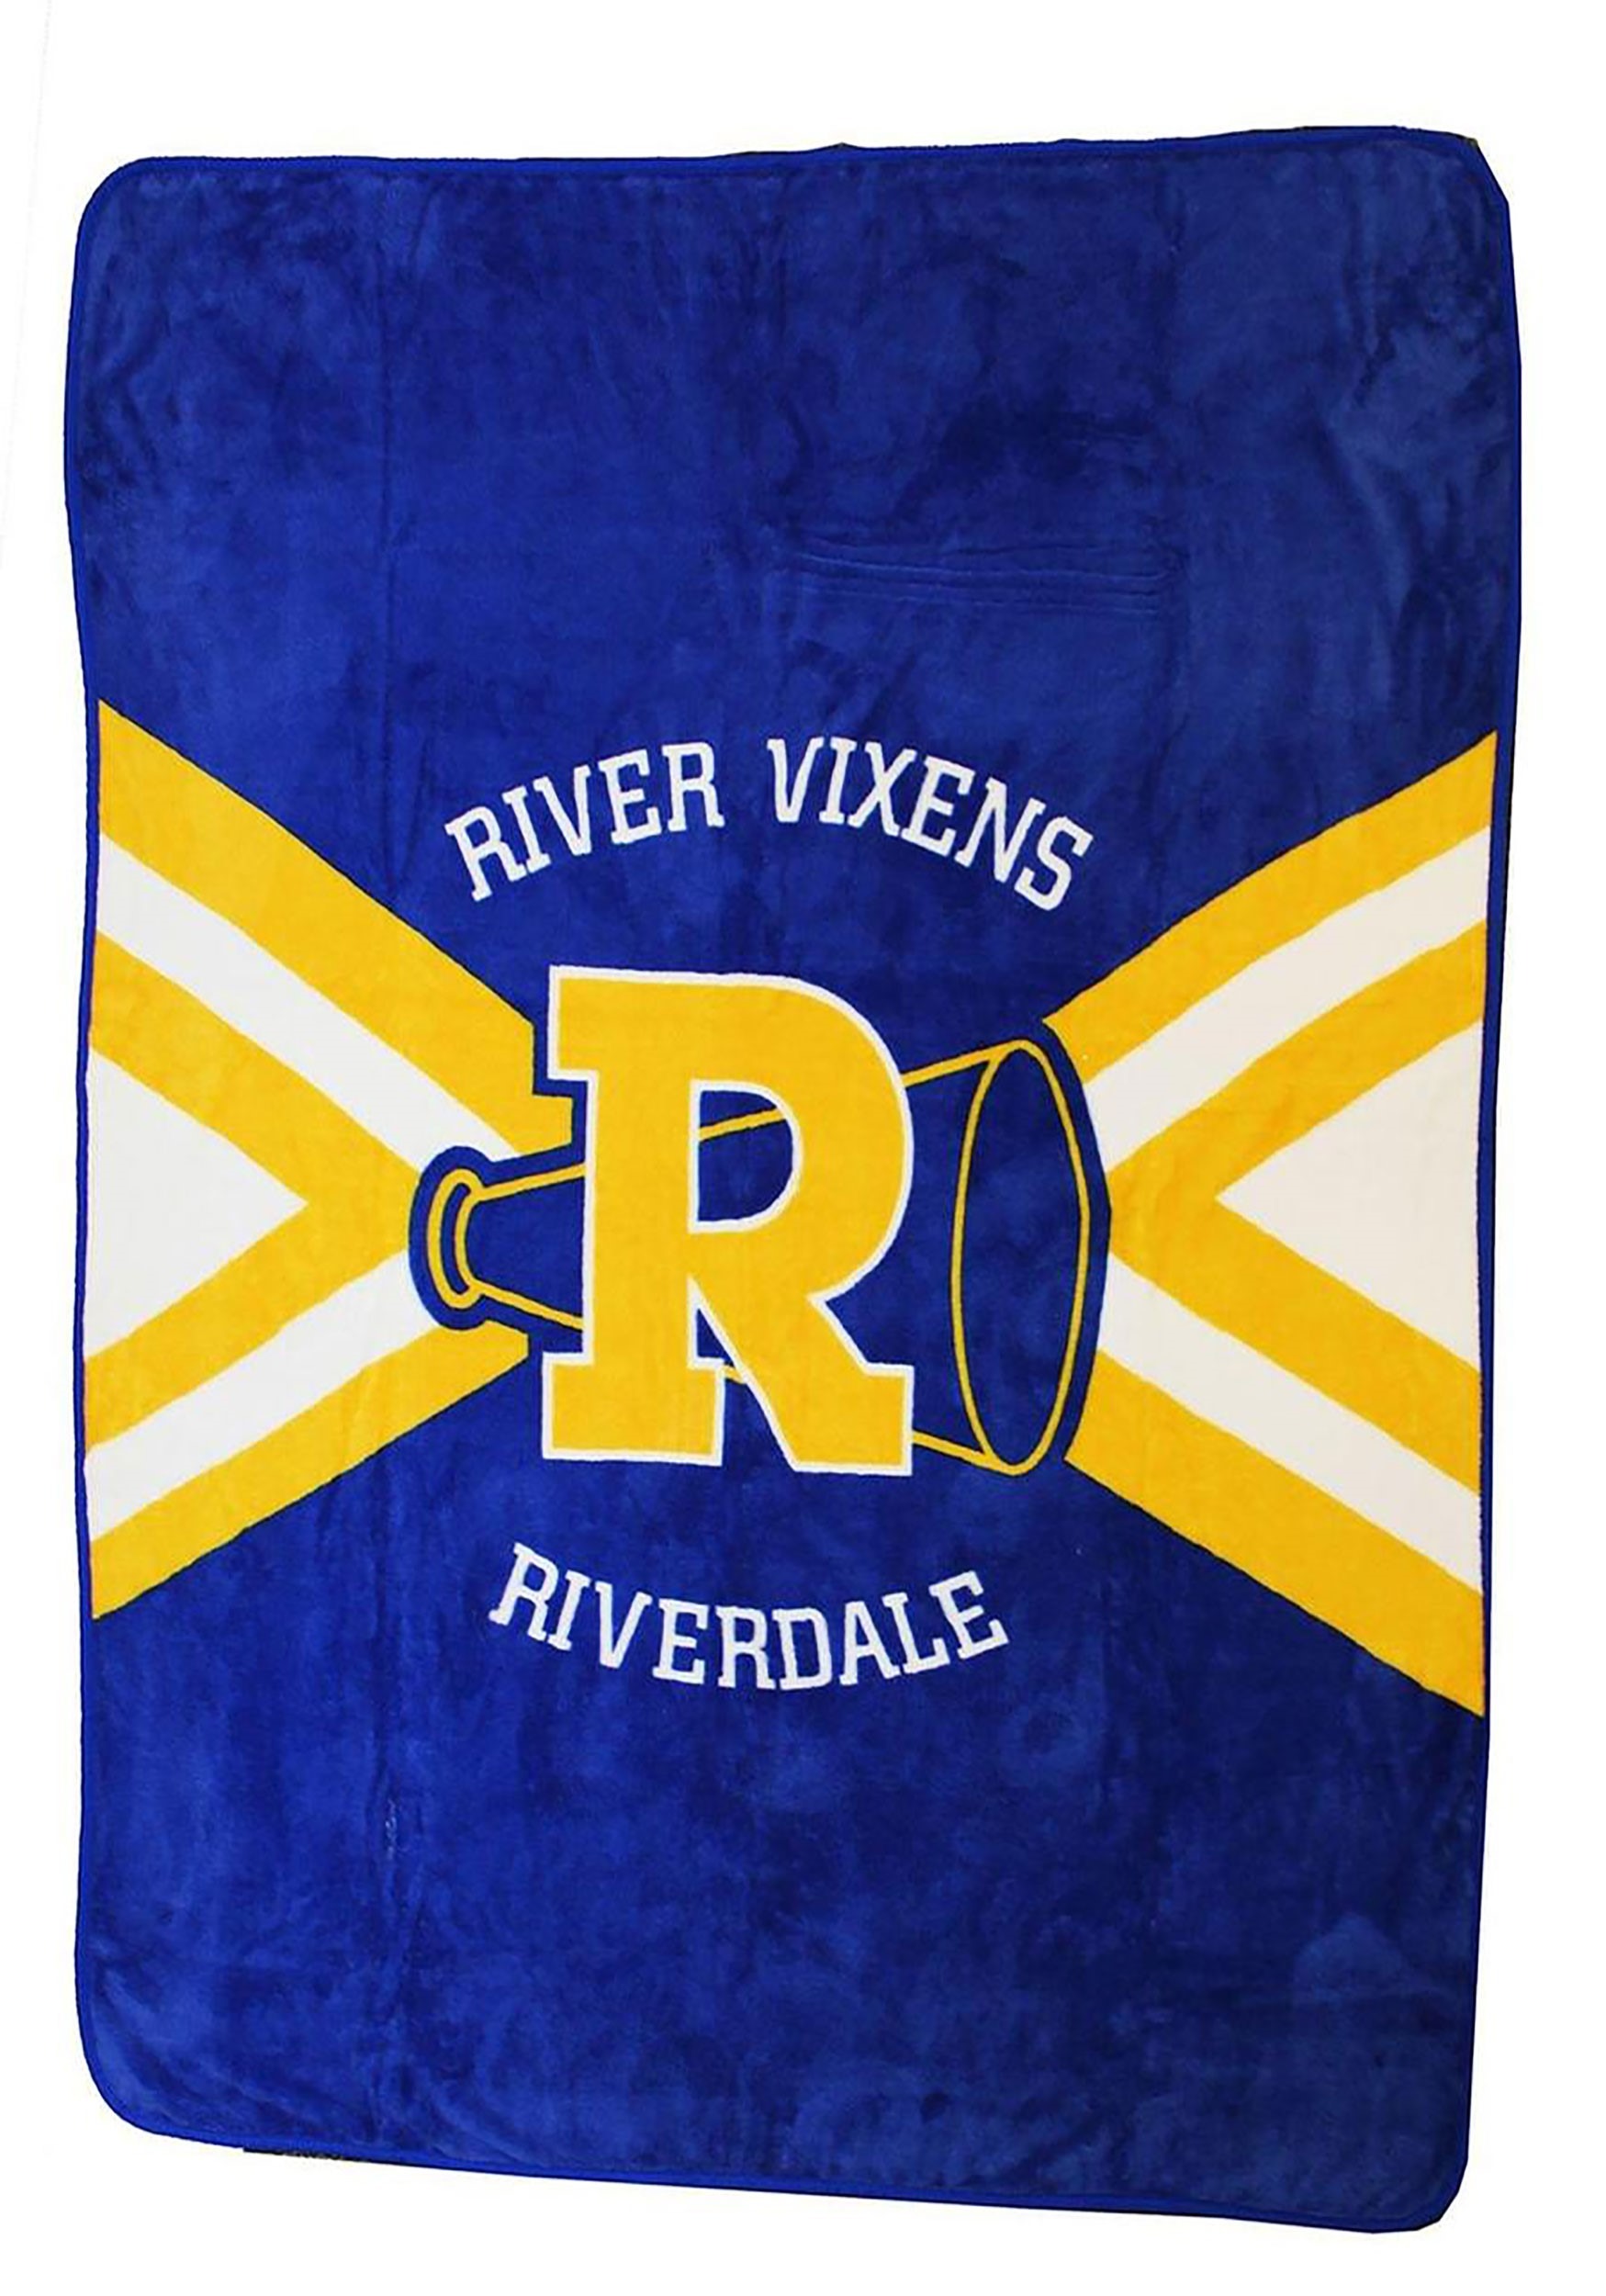 Fleece Riverdale Vixens Blanket